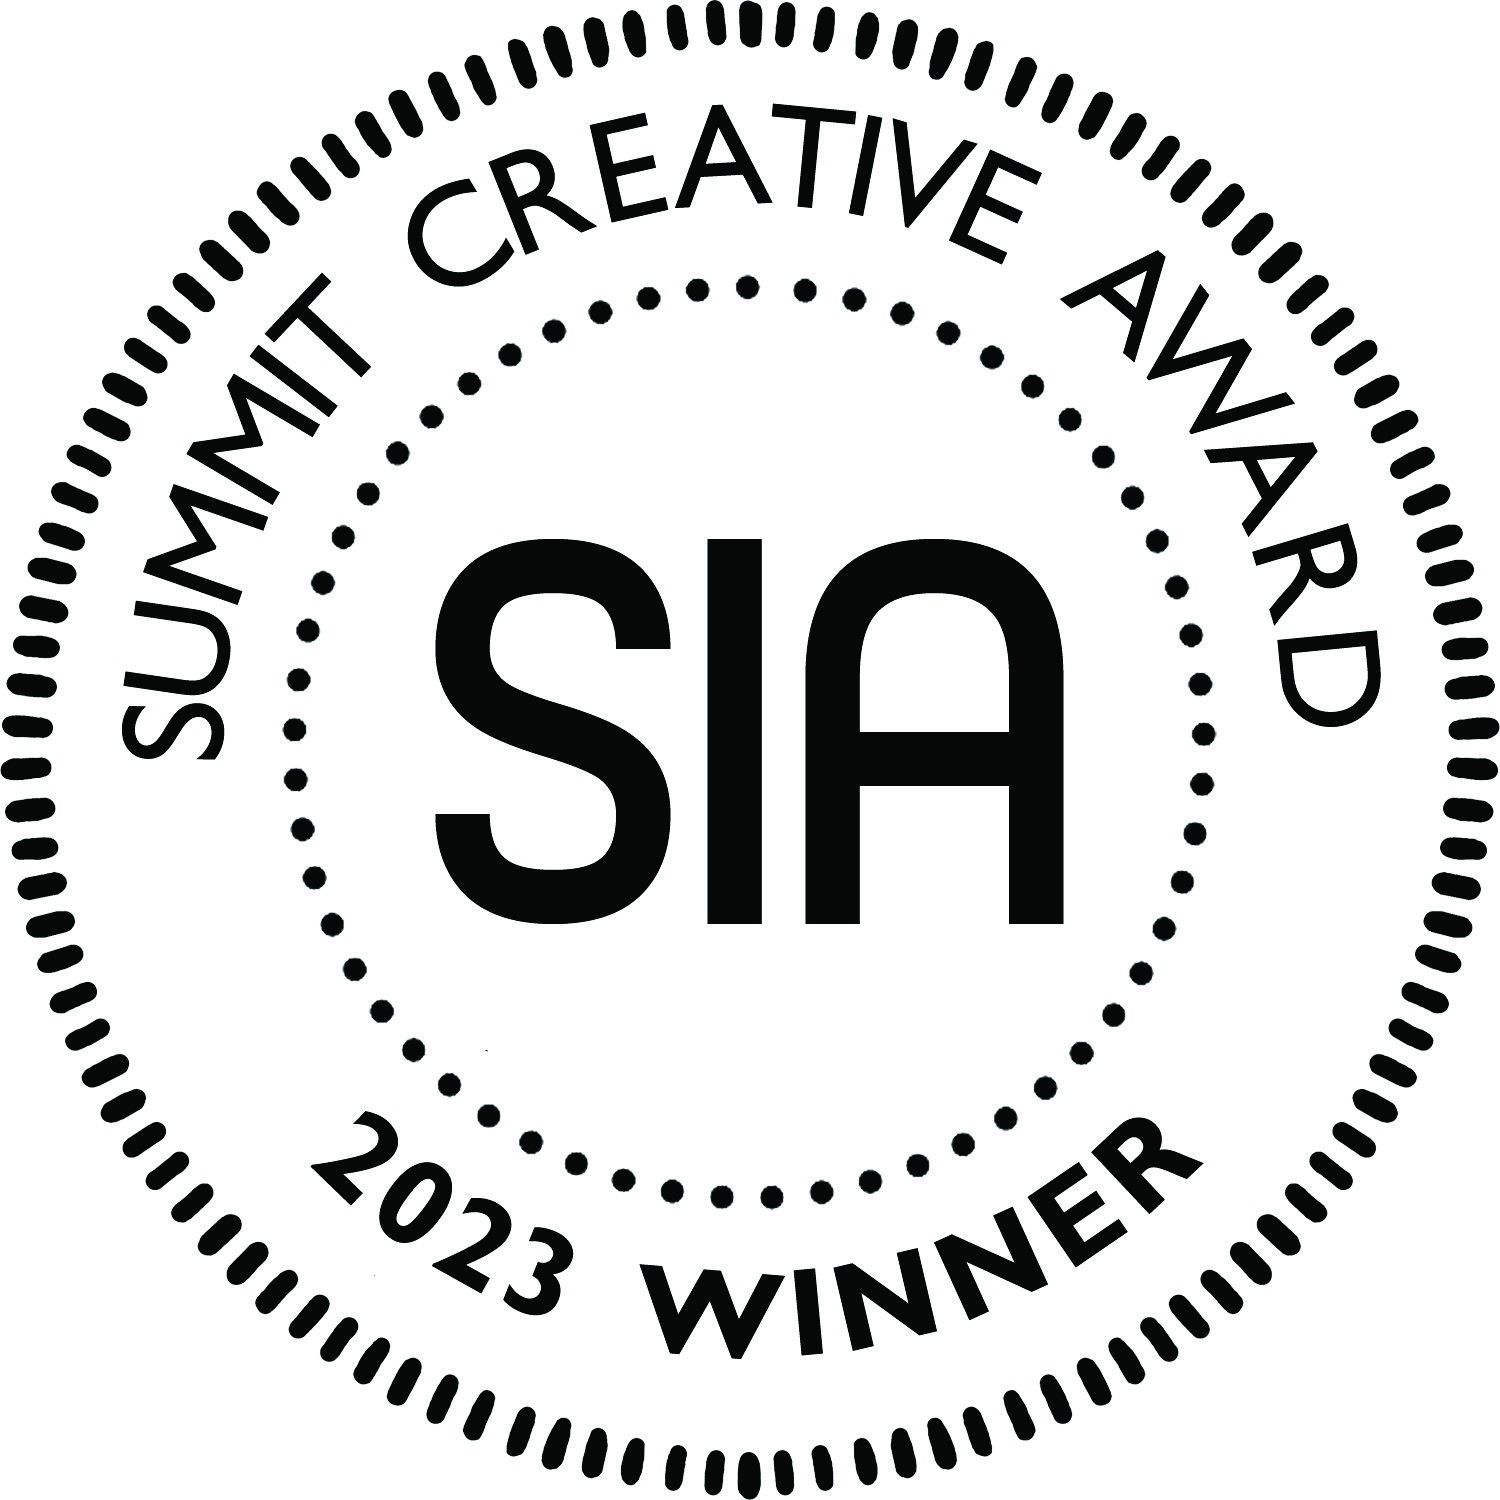 Summit Creative Award Seal